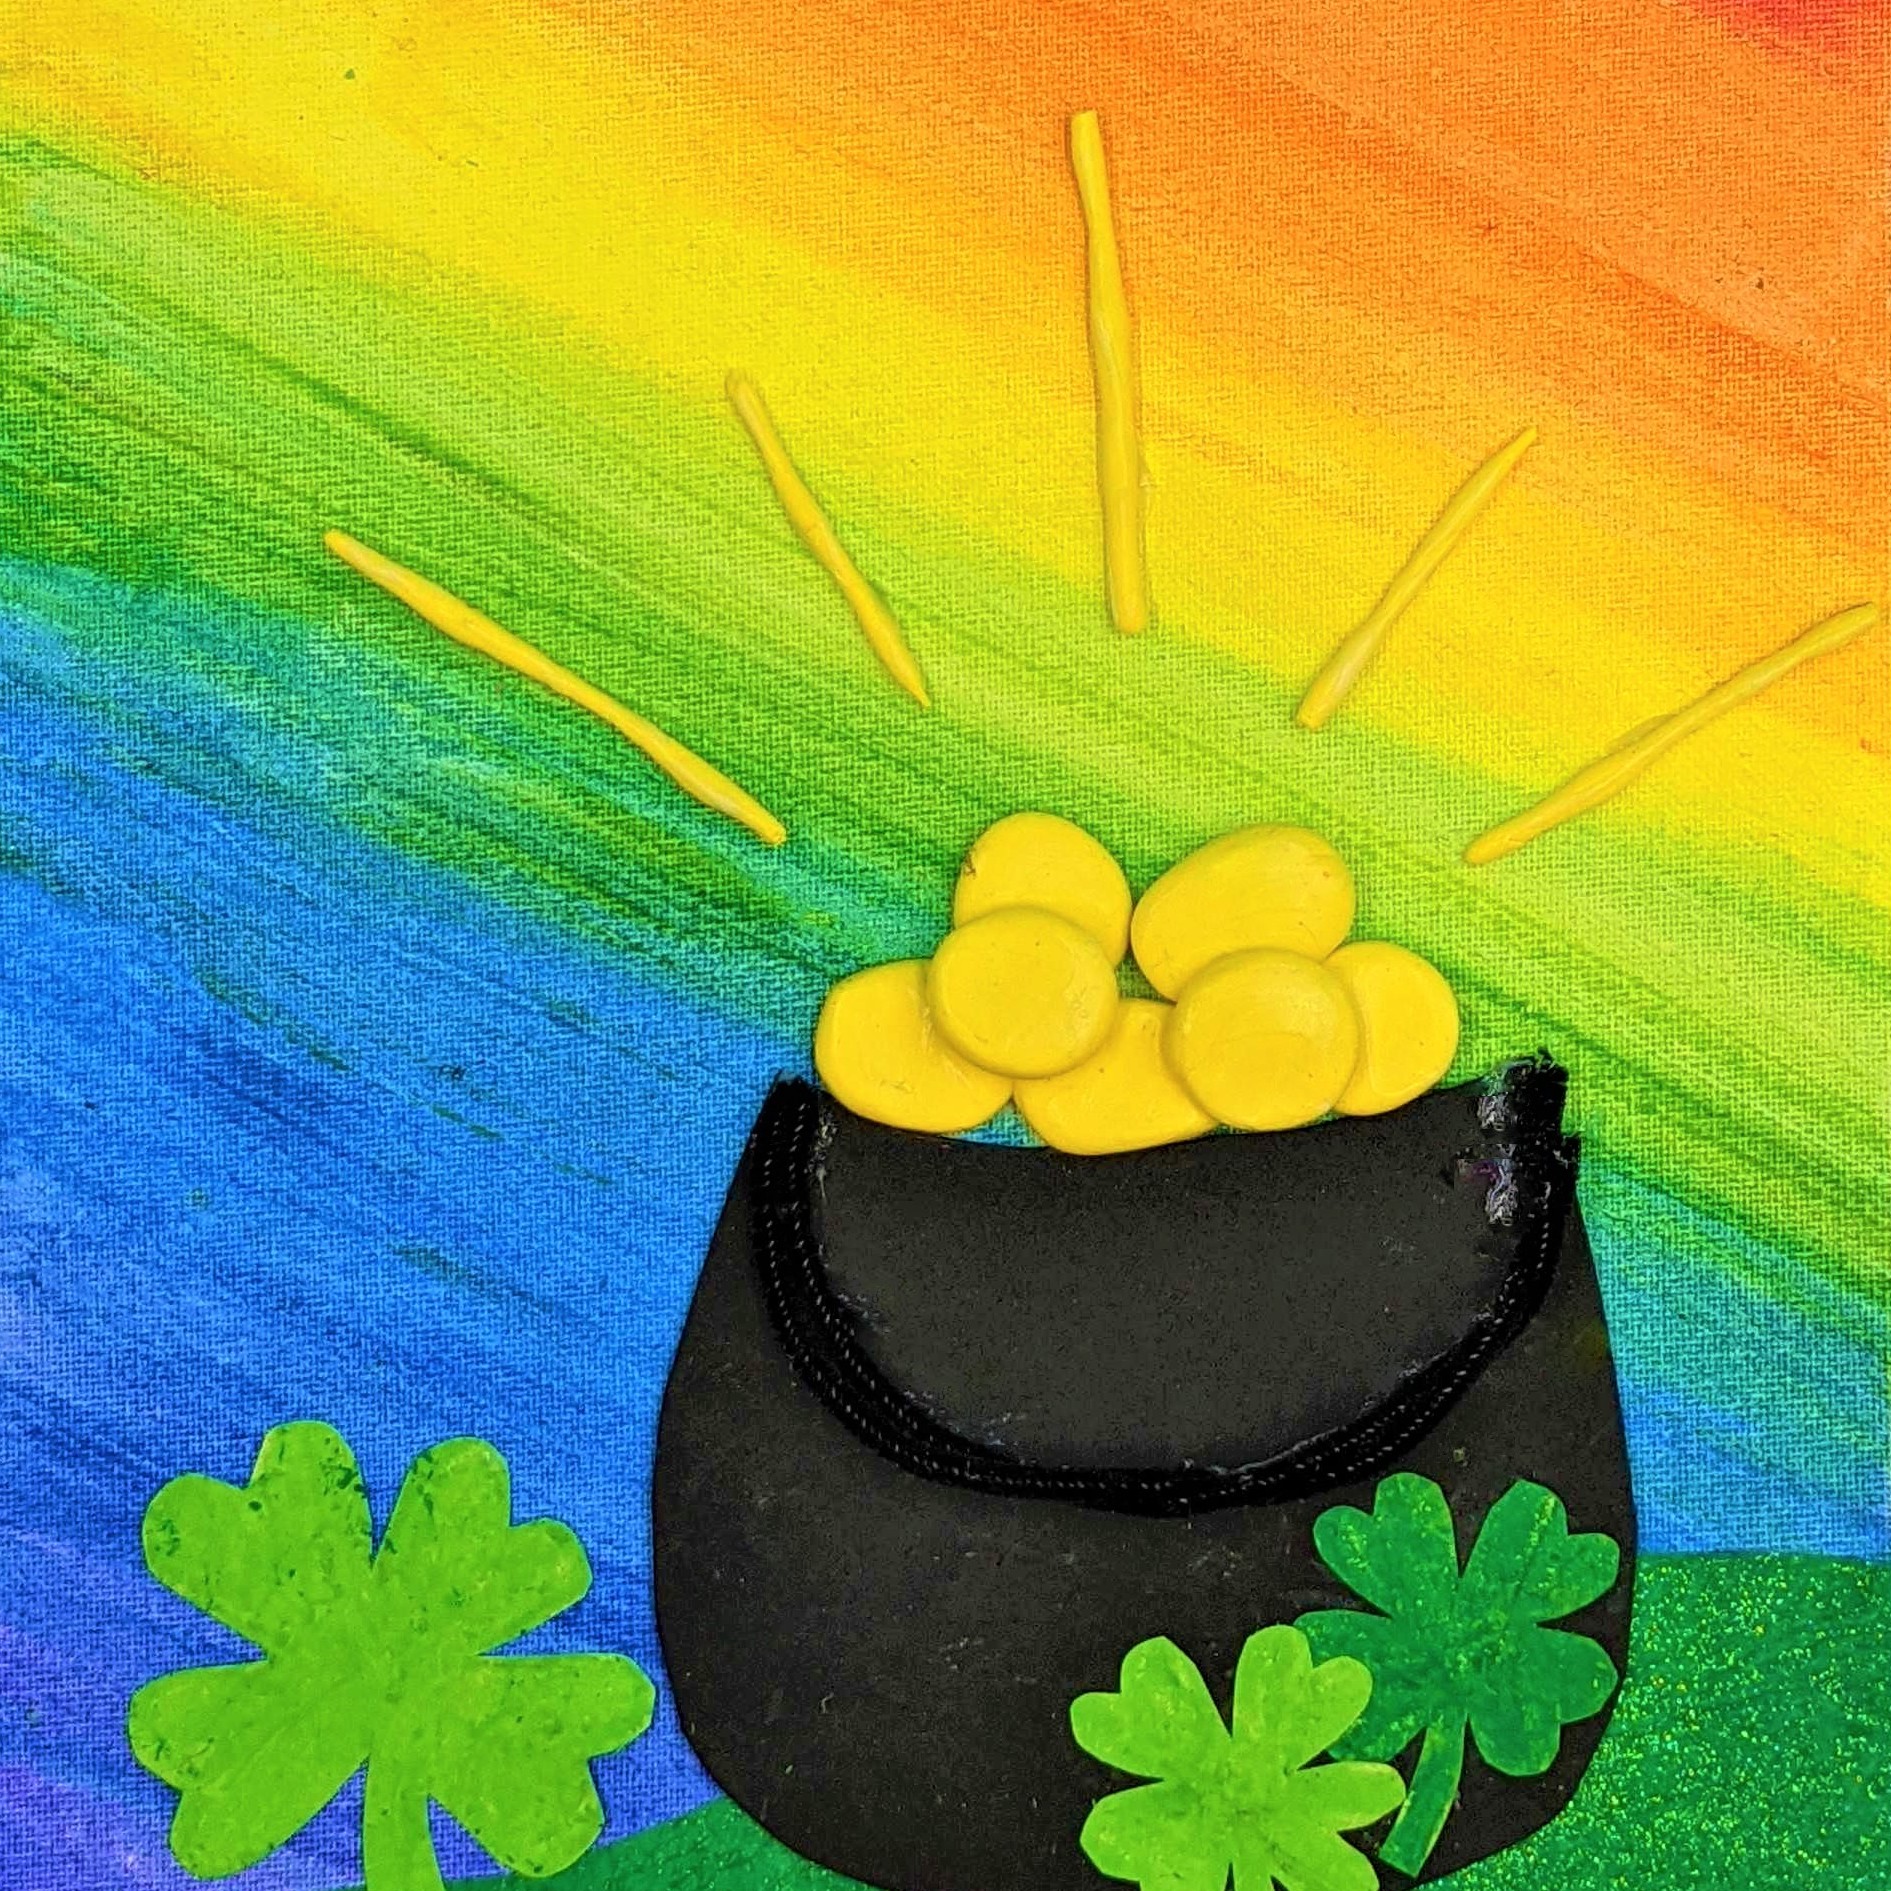 Kidcreate Studio - Broomfield, St. Patrick's Day Rainbow on Canvas Art Project